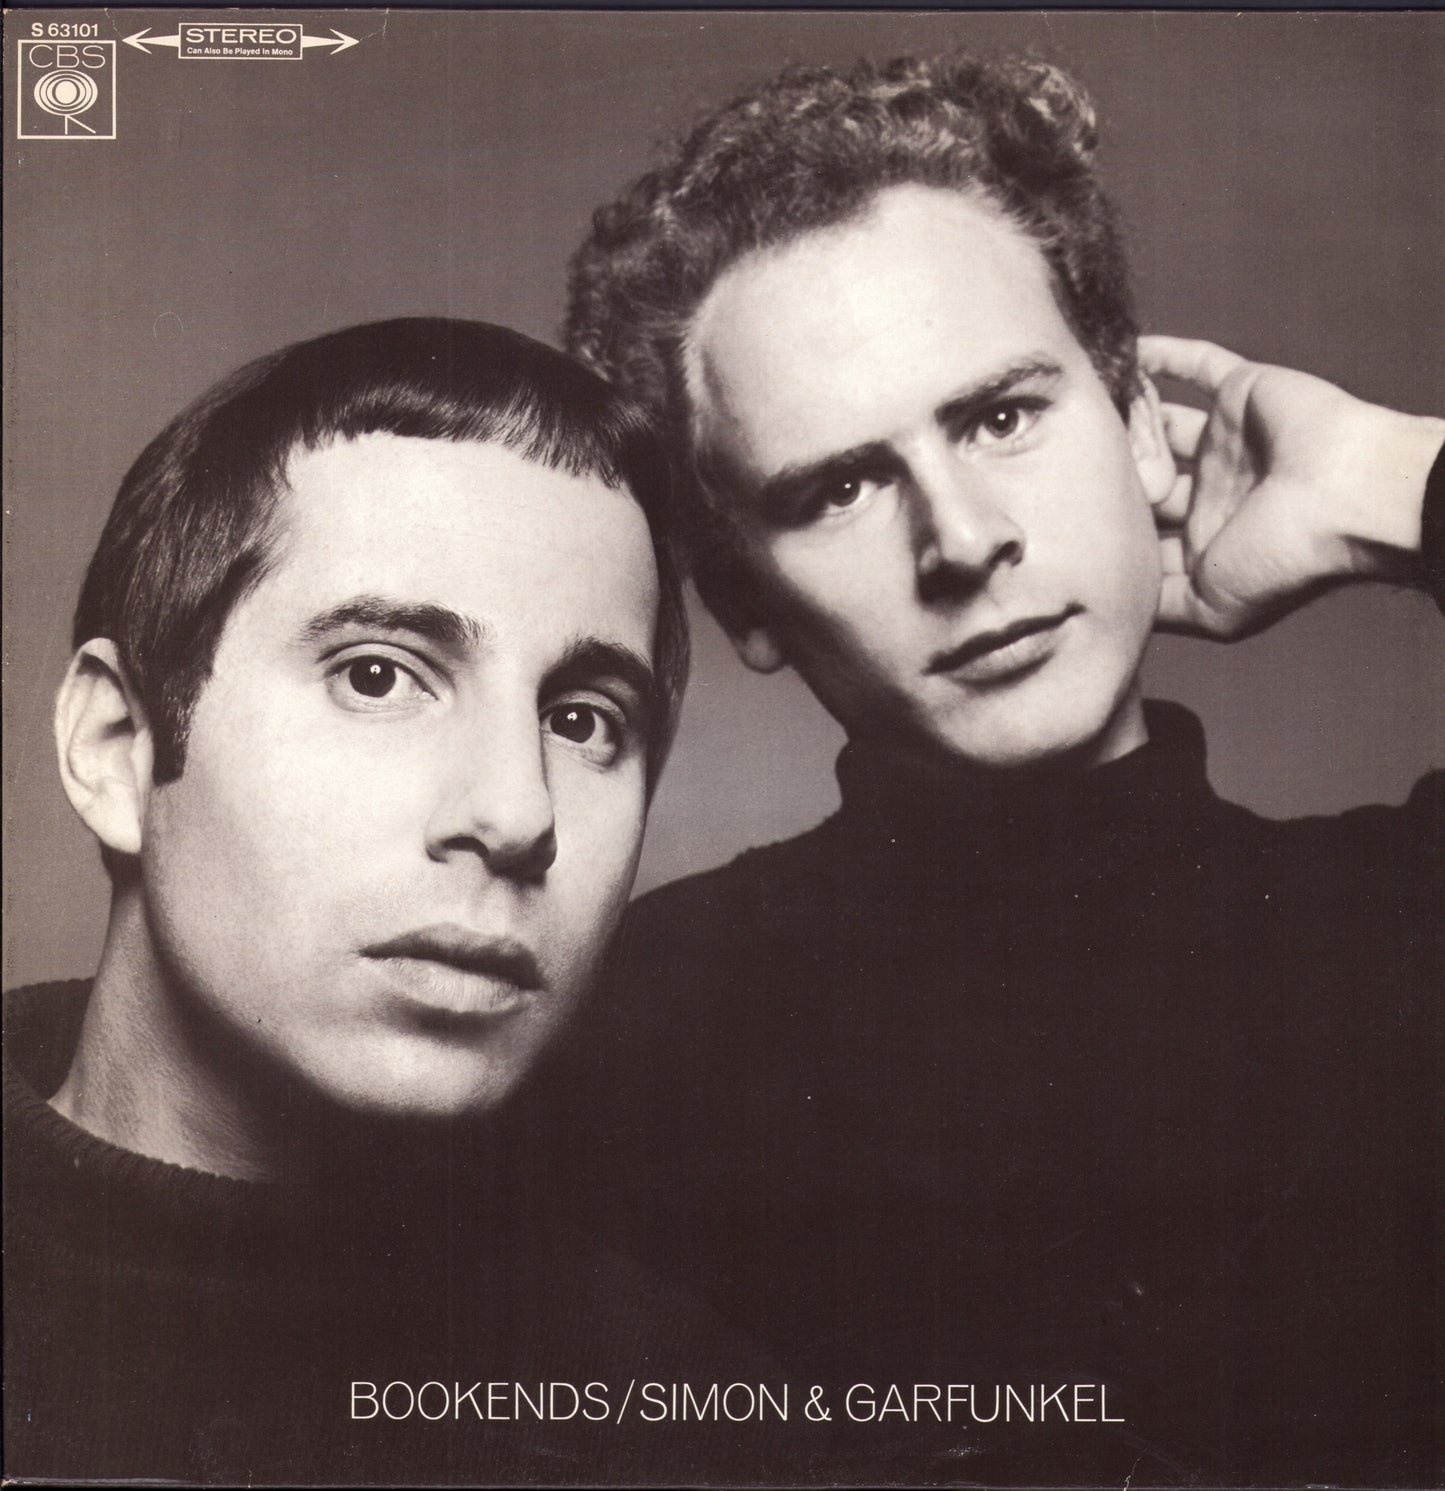 Simon And Garfunkel - Bookends (Vinyl LP)